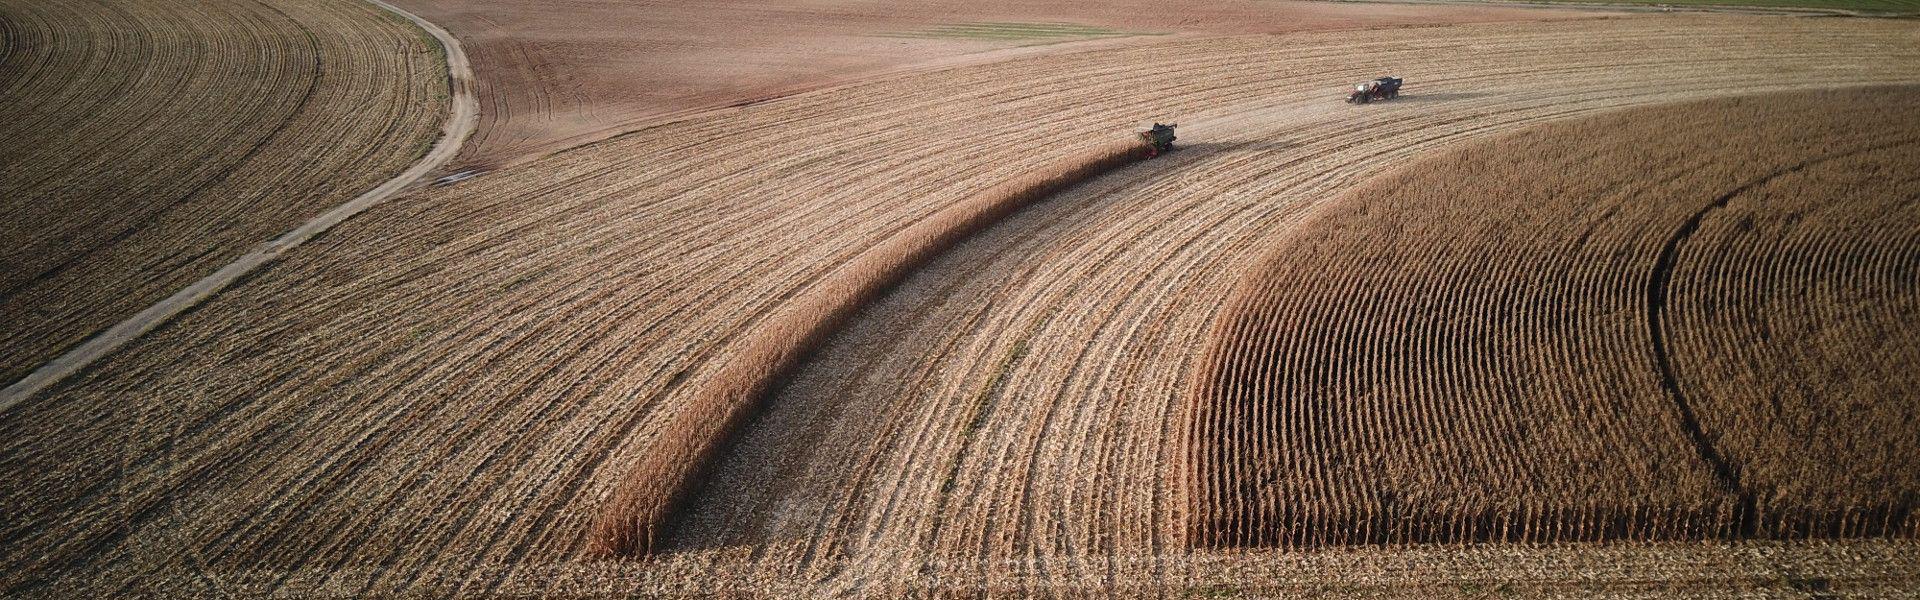 Imatge aèria cultiu blat de moro